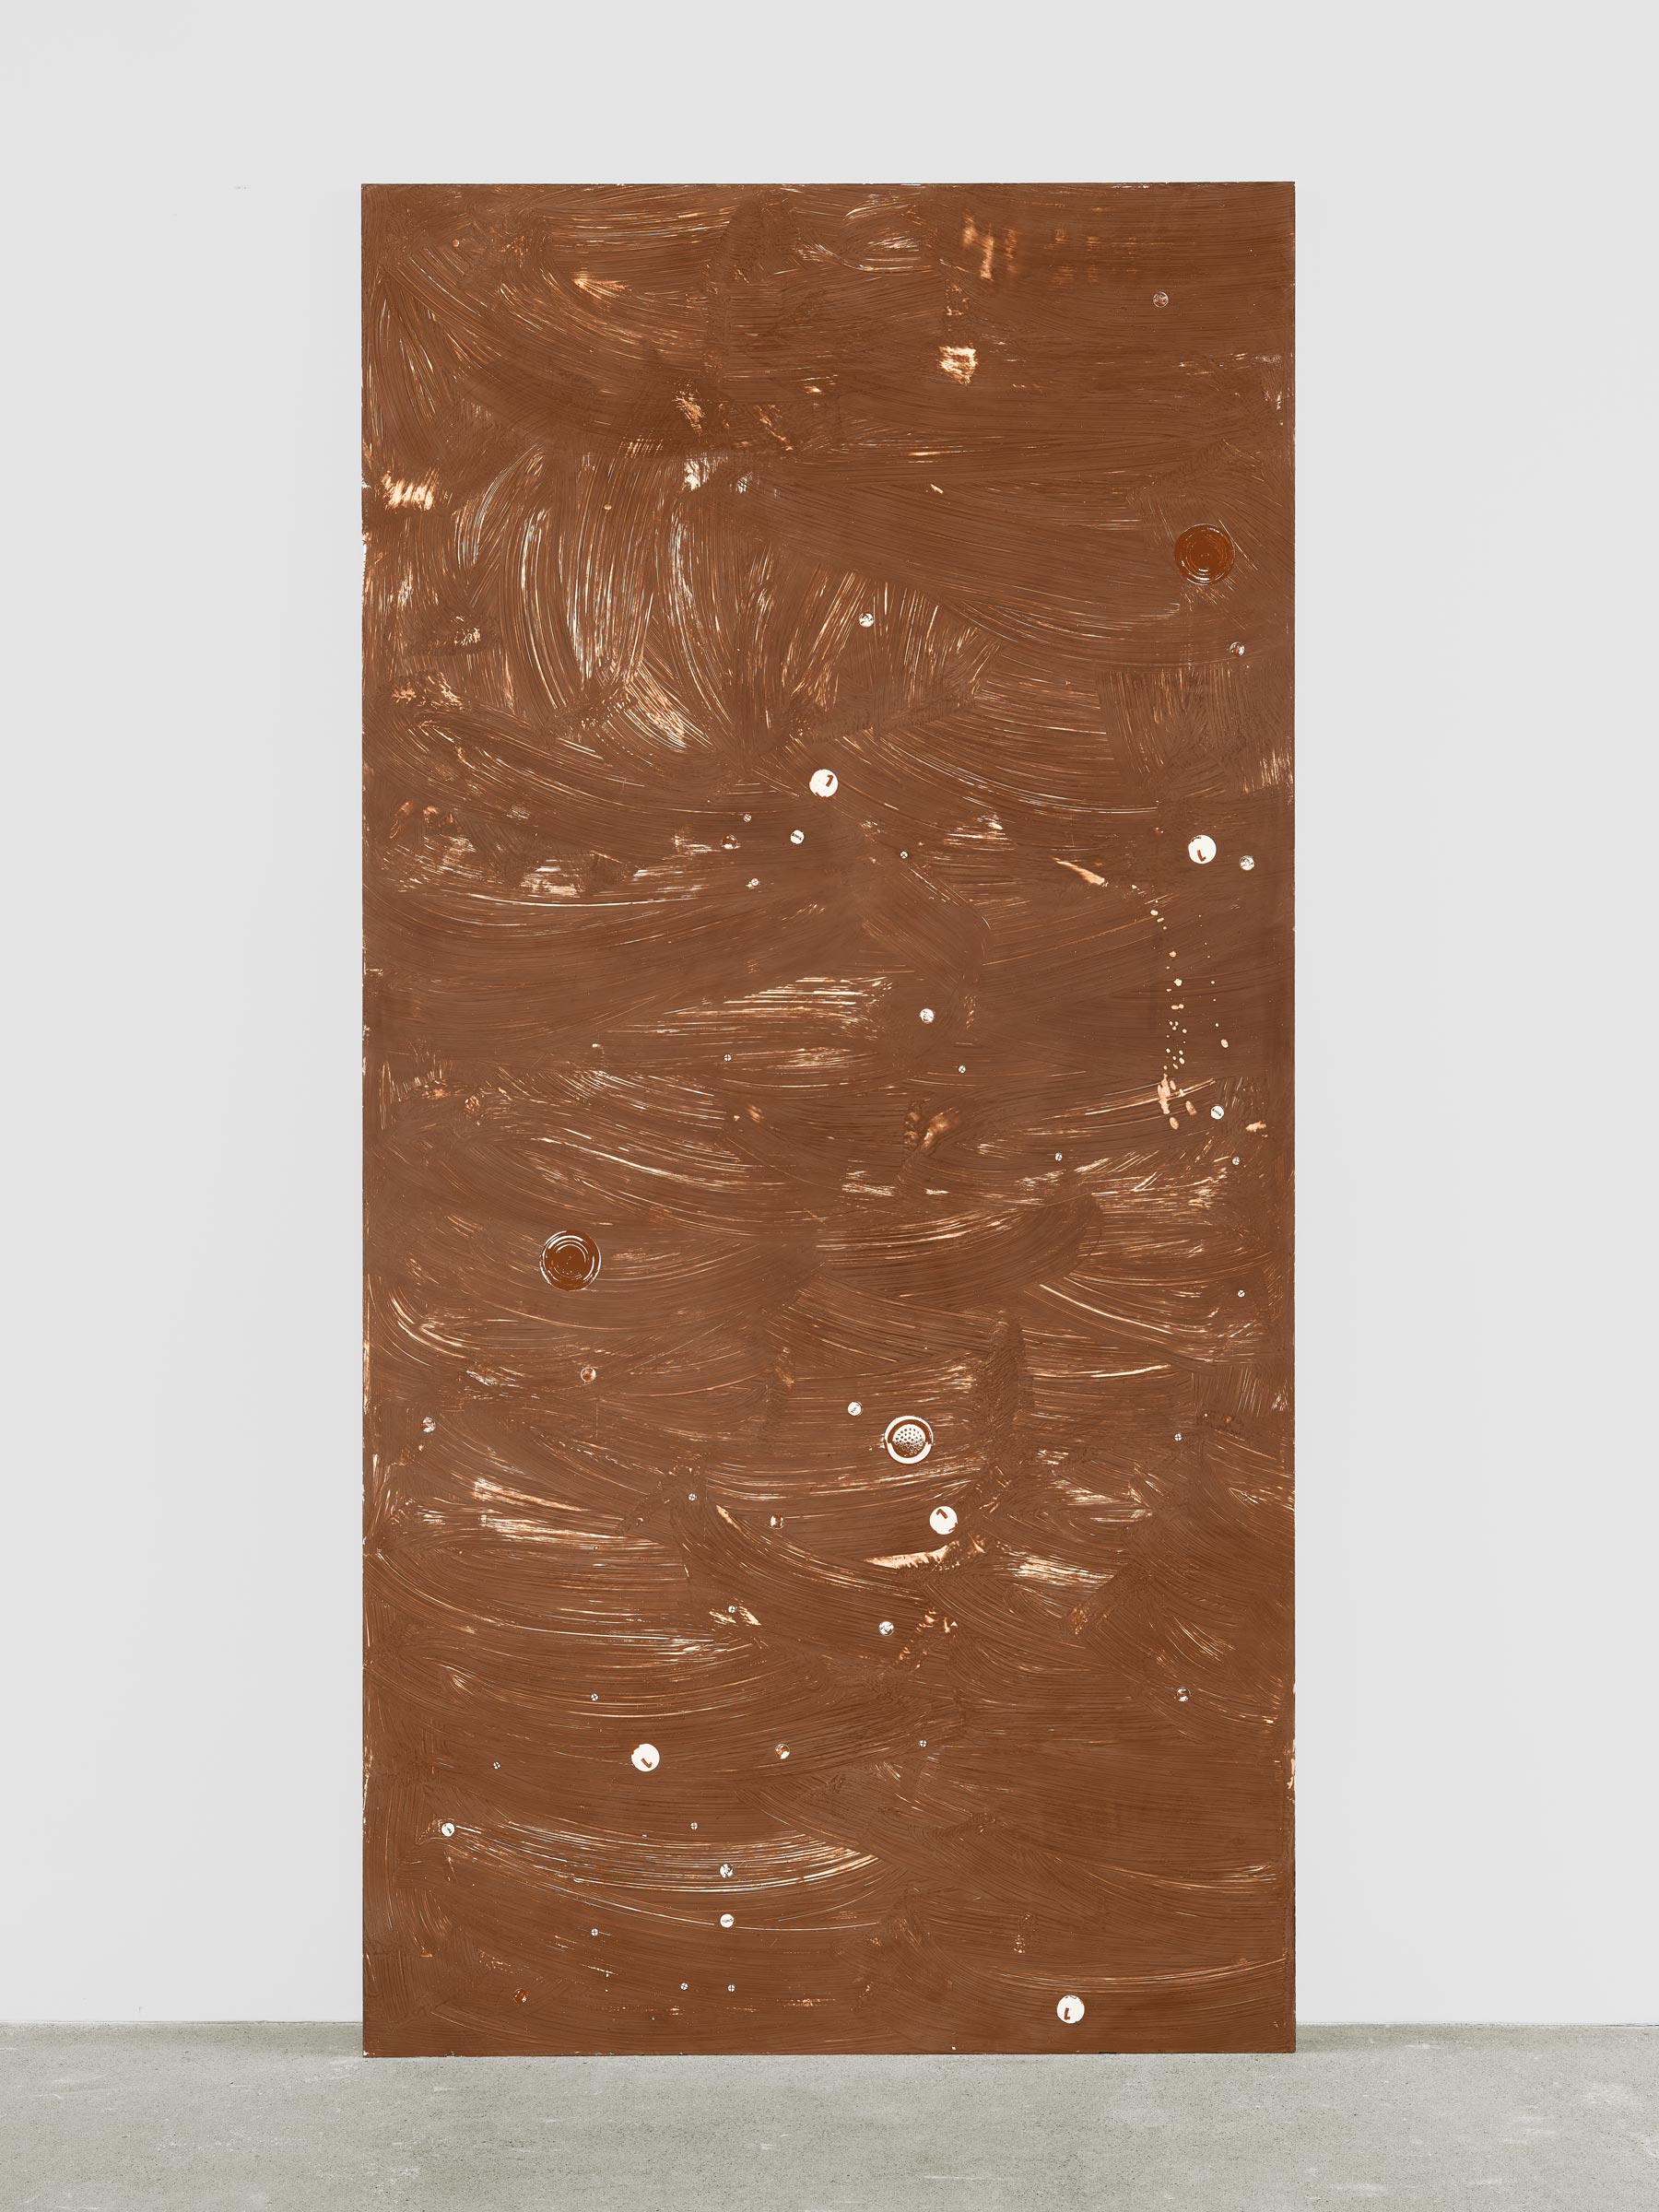 Alex Kwartler, Night Sky IV, 2022, Venetian plaster on plywood, 96 x 48 in.